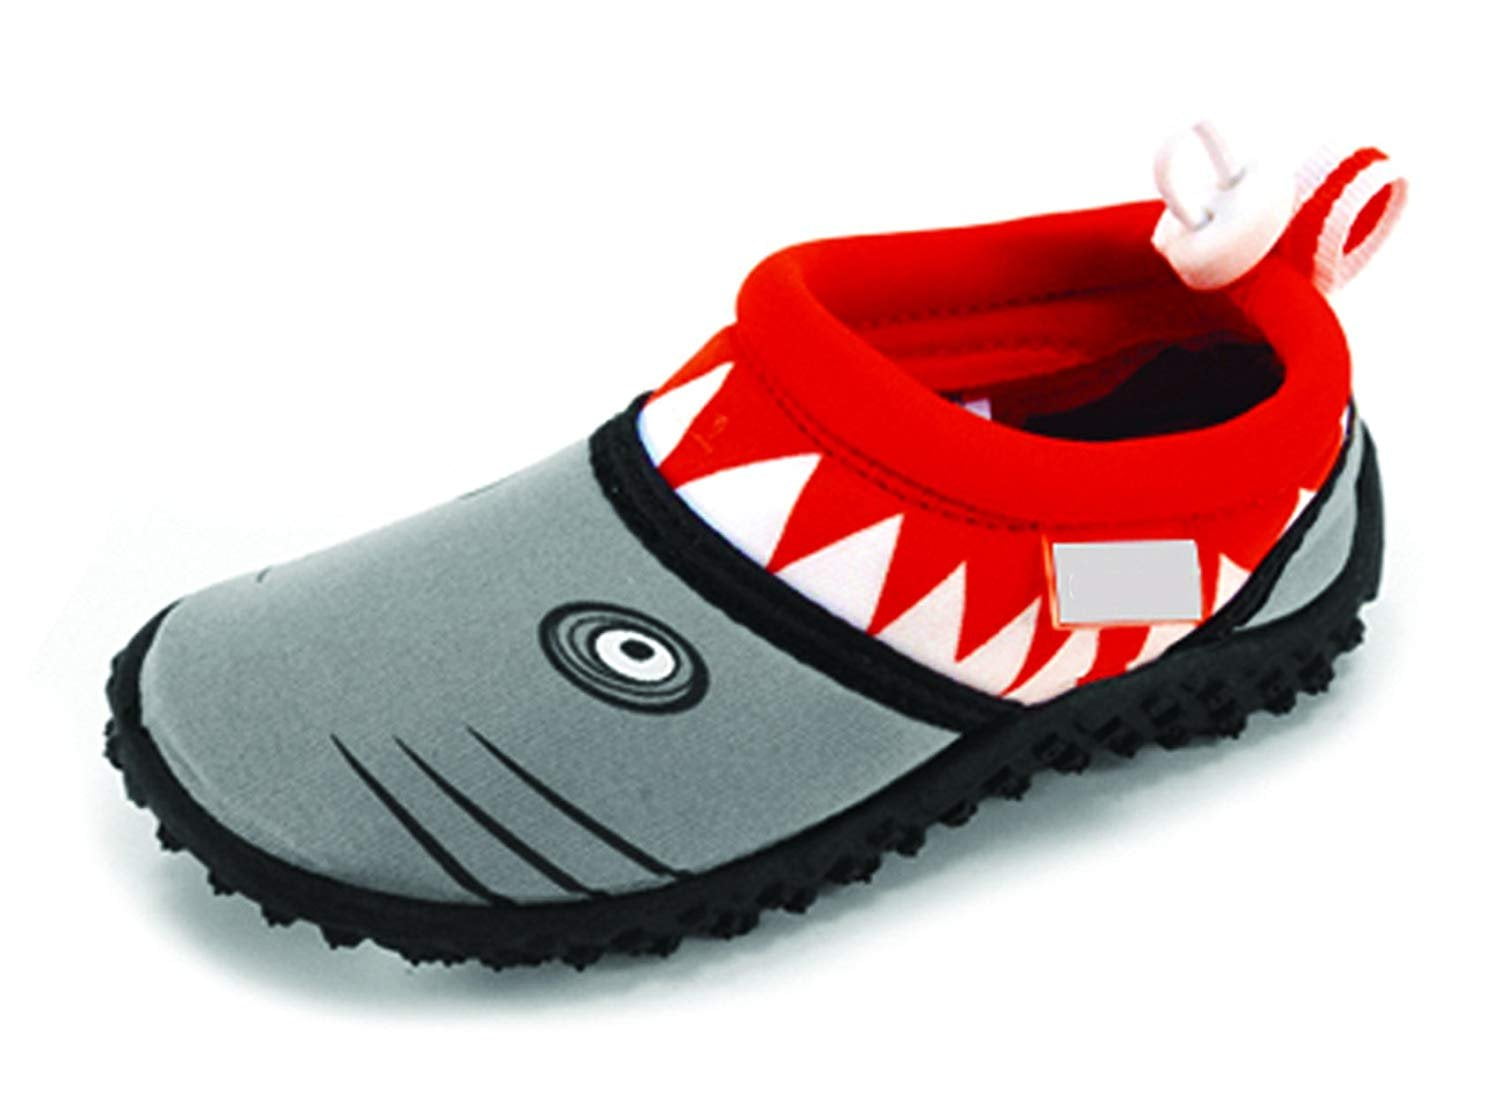 walmart shark shoes